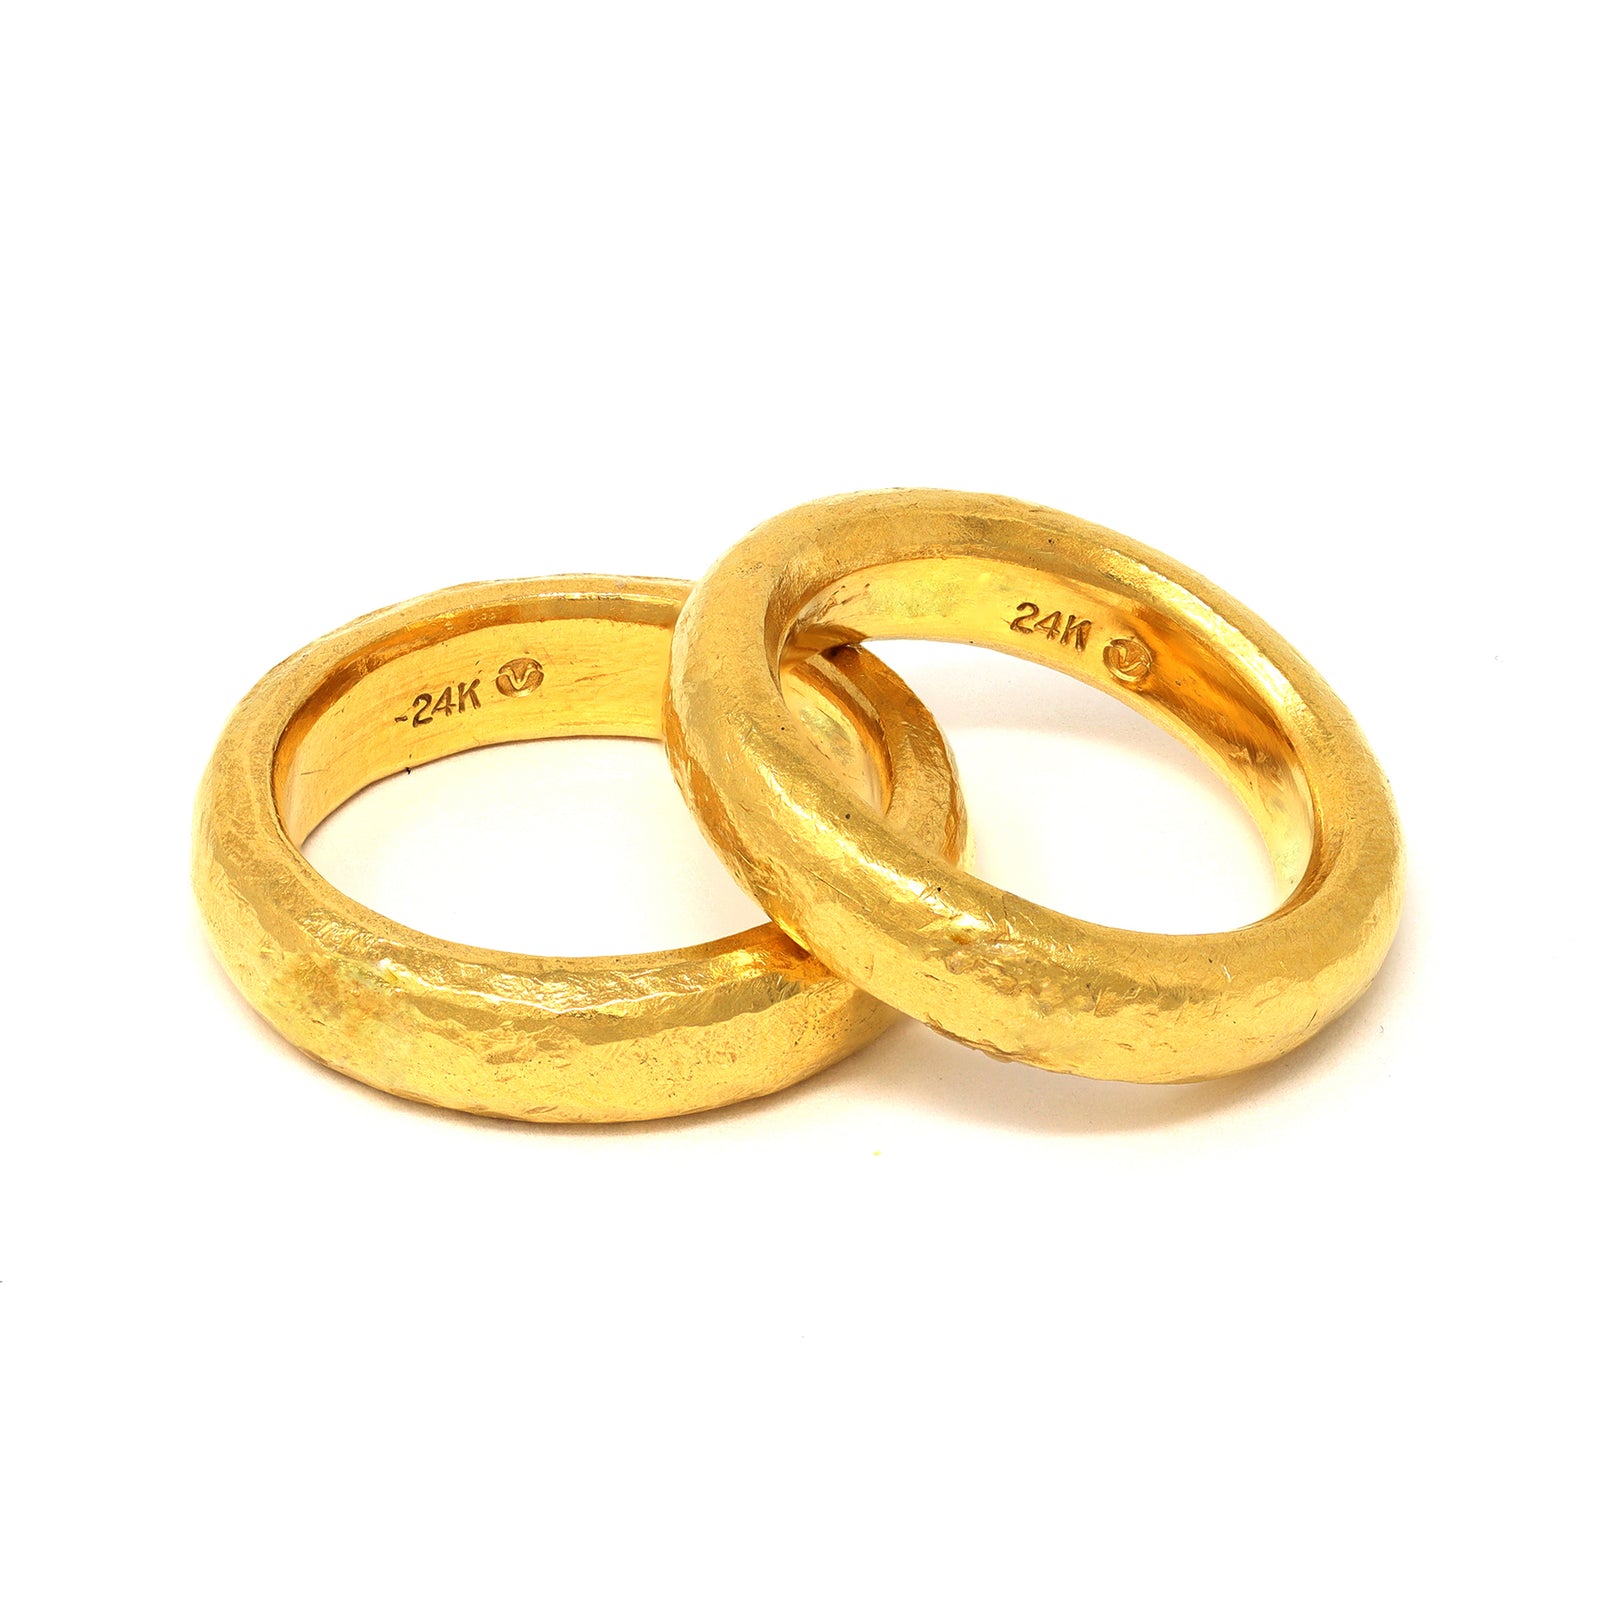 24 Karat Gold Dragon Ring - 2 For Sale on 1stDibs